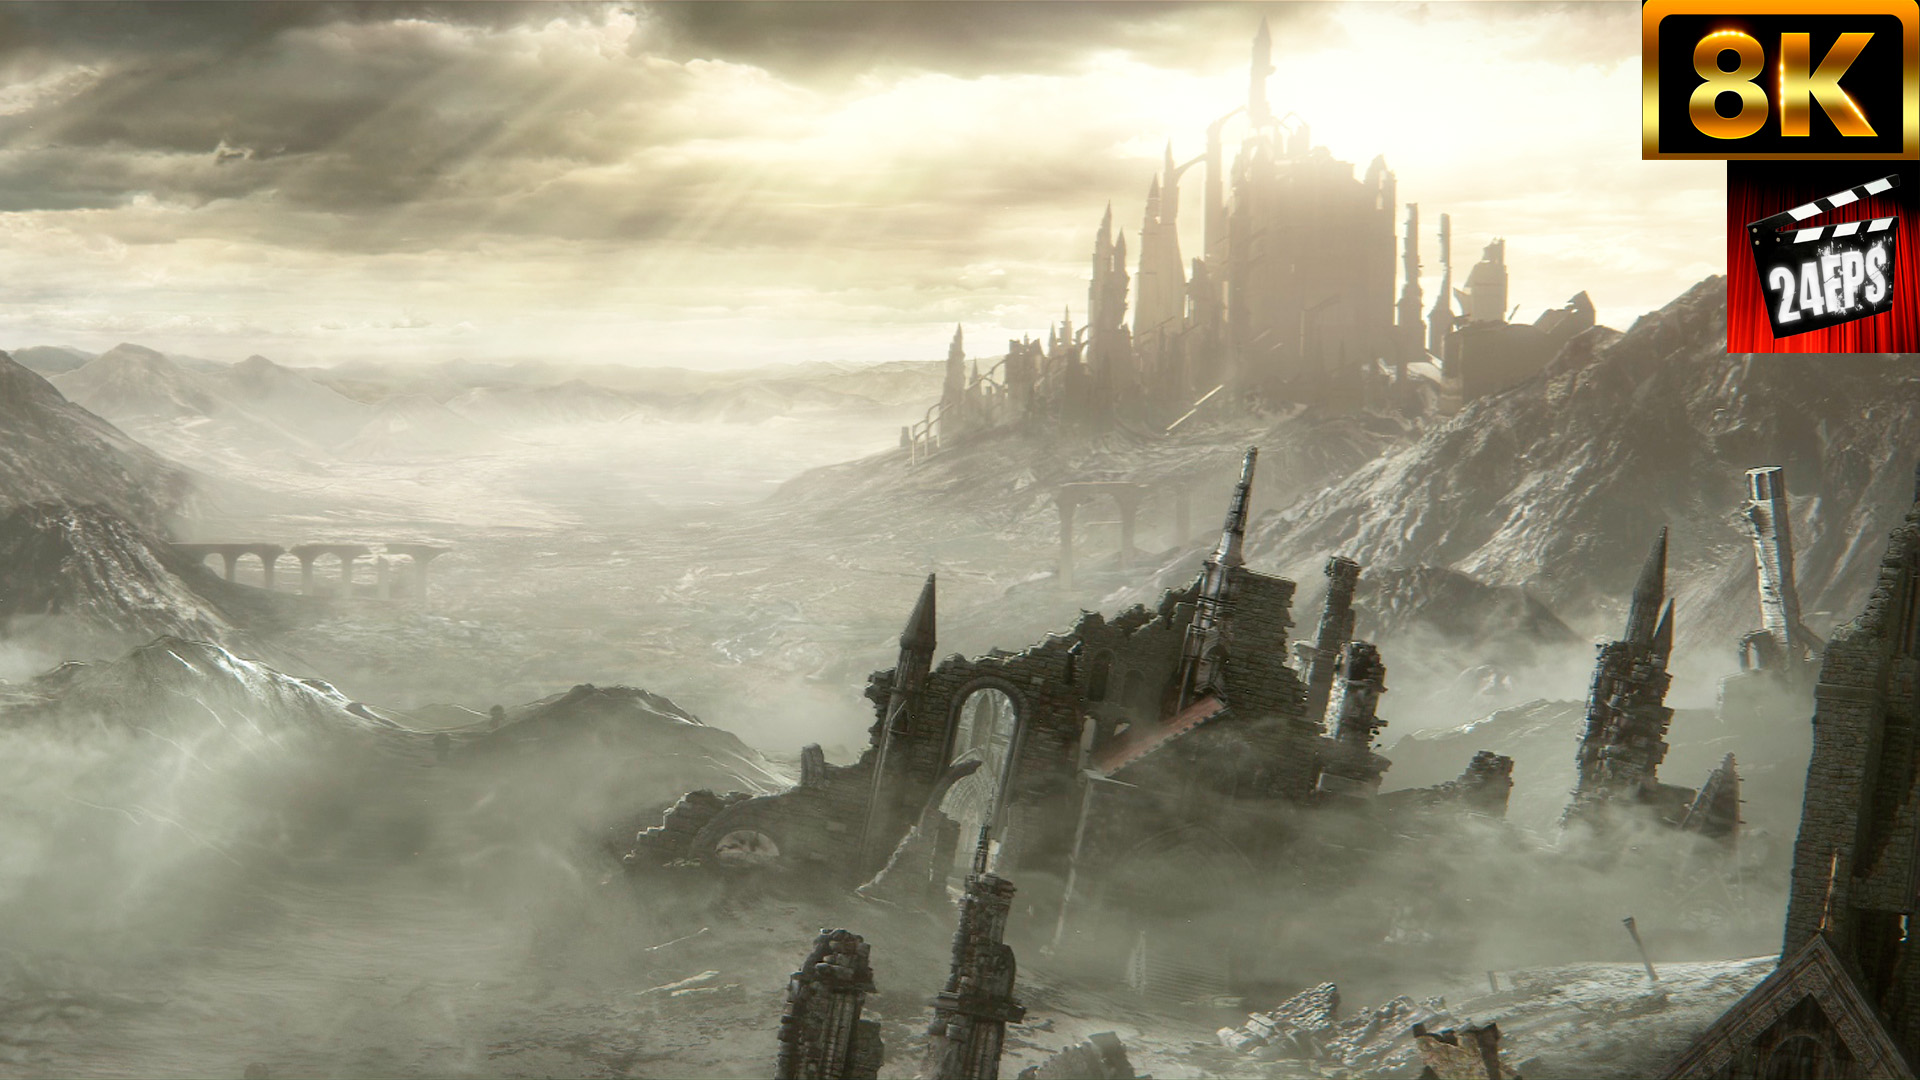 Dark Souls III - Trailer E3 2015 (Remastered CGI 8K)